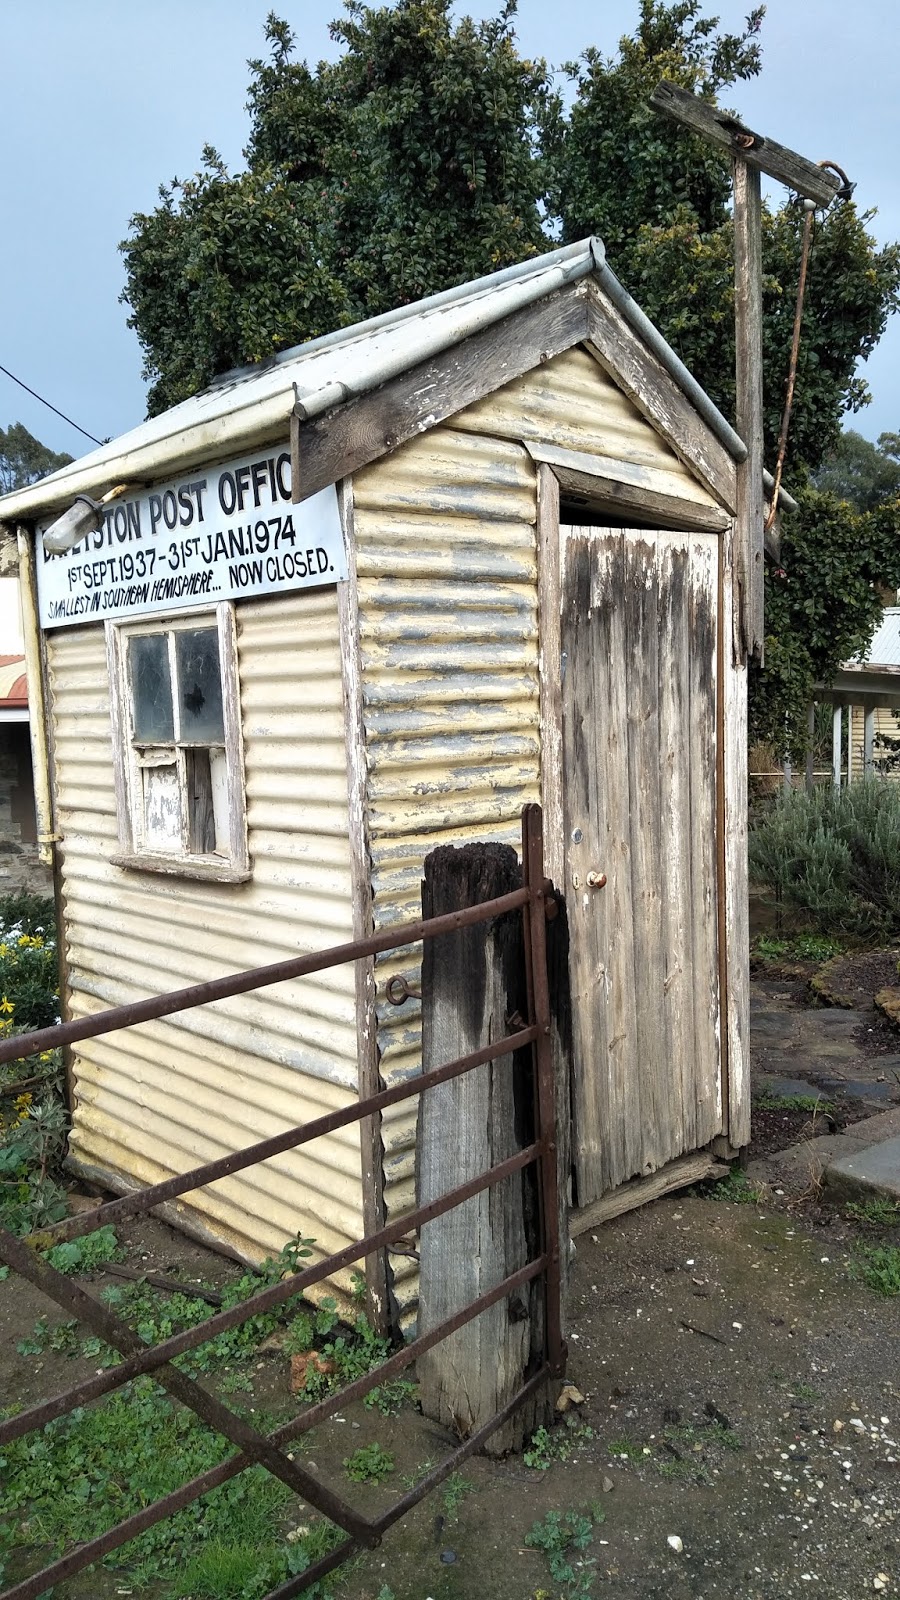 Smallest Post Office Southern Hemisphere | museum | Mattschoss Rd, Daveyston SA 5360, Australia